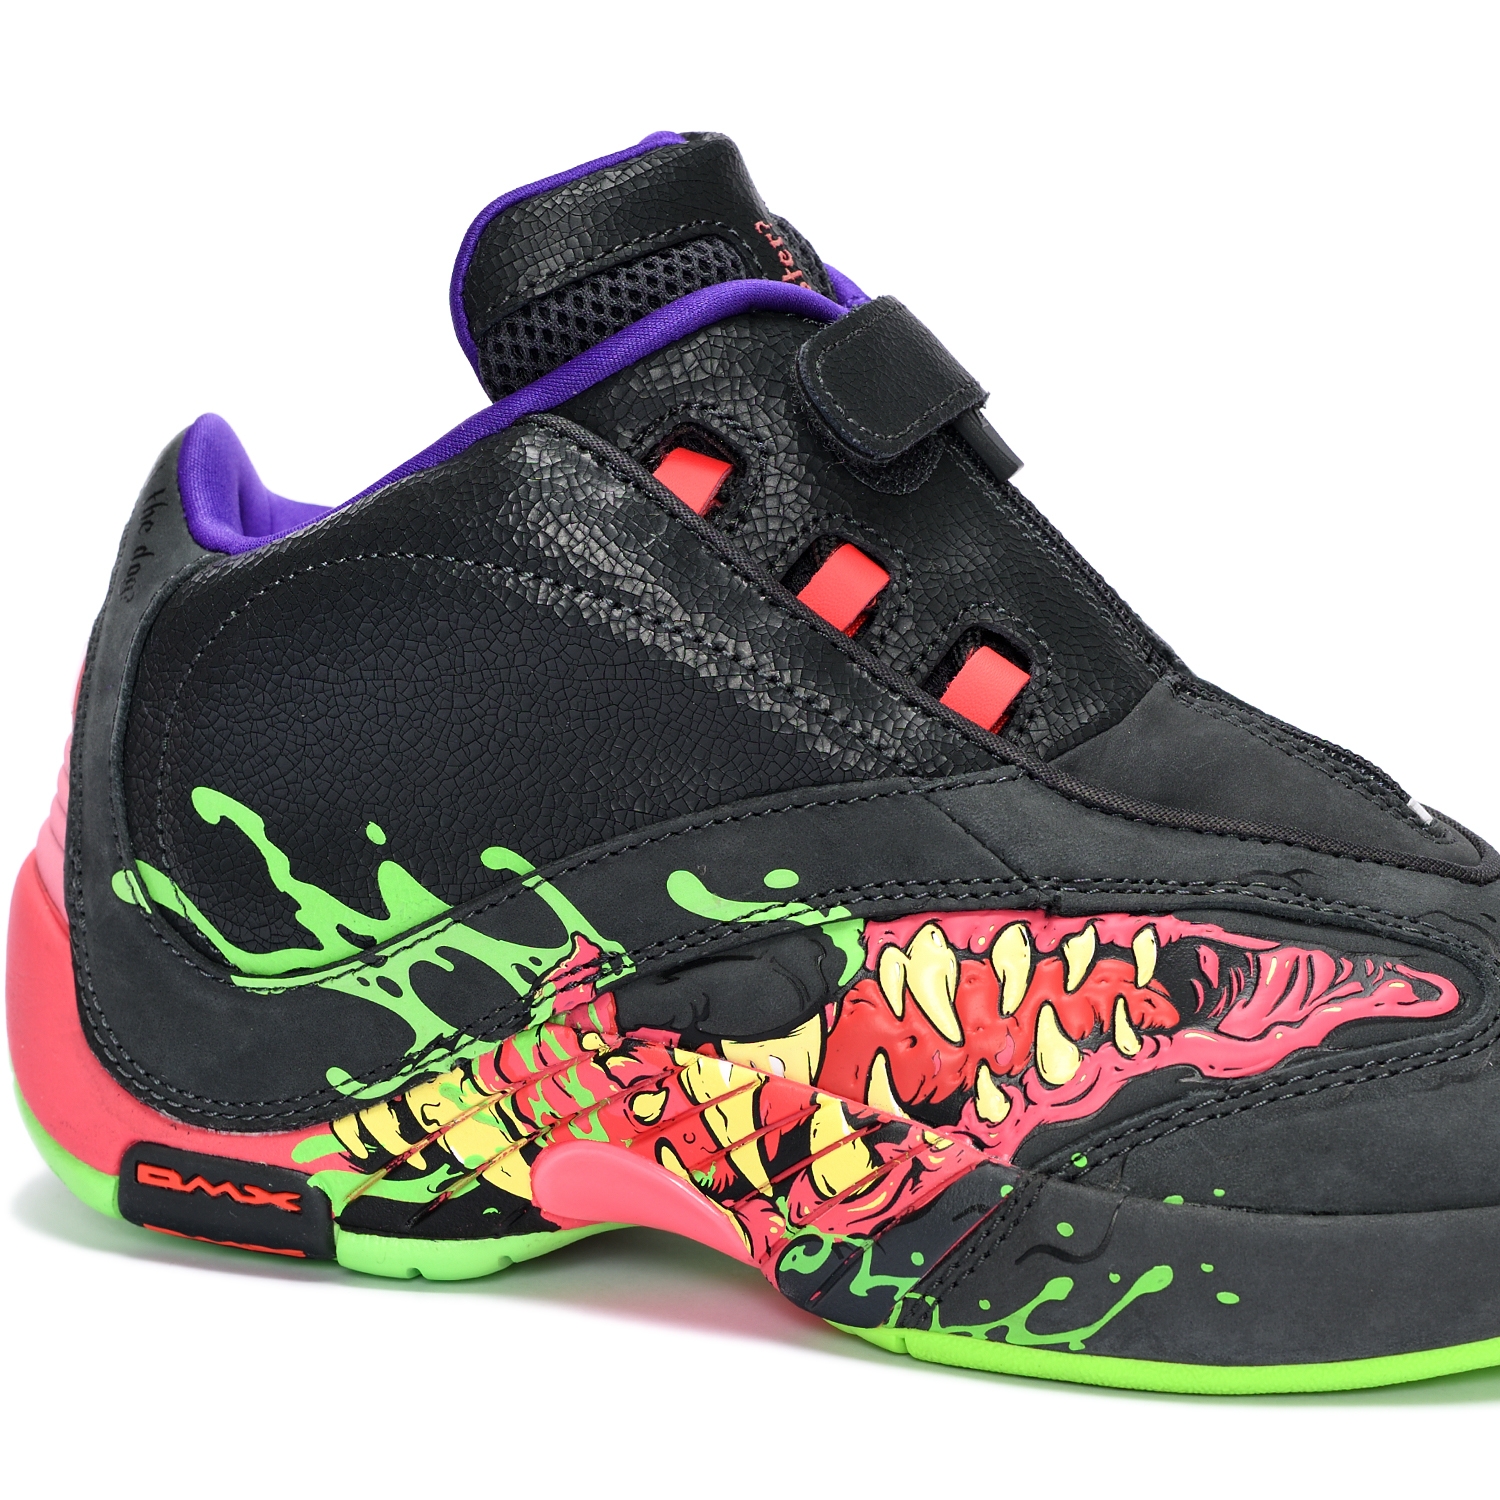 Reebok Ghostbusters Answer IV Men's Basketball Shoes True Grey 8 / Solar Green / Ultra Violet